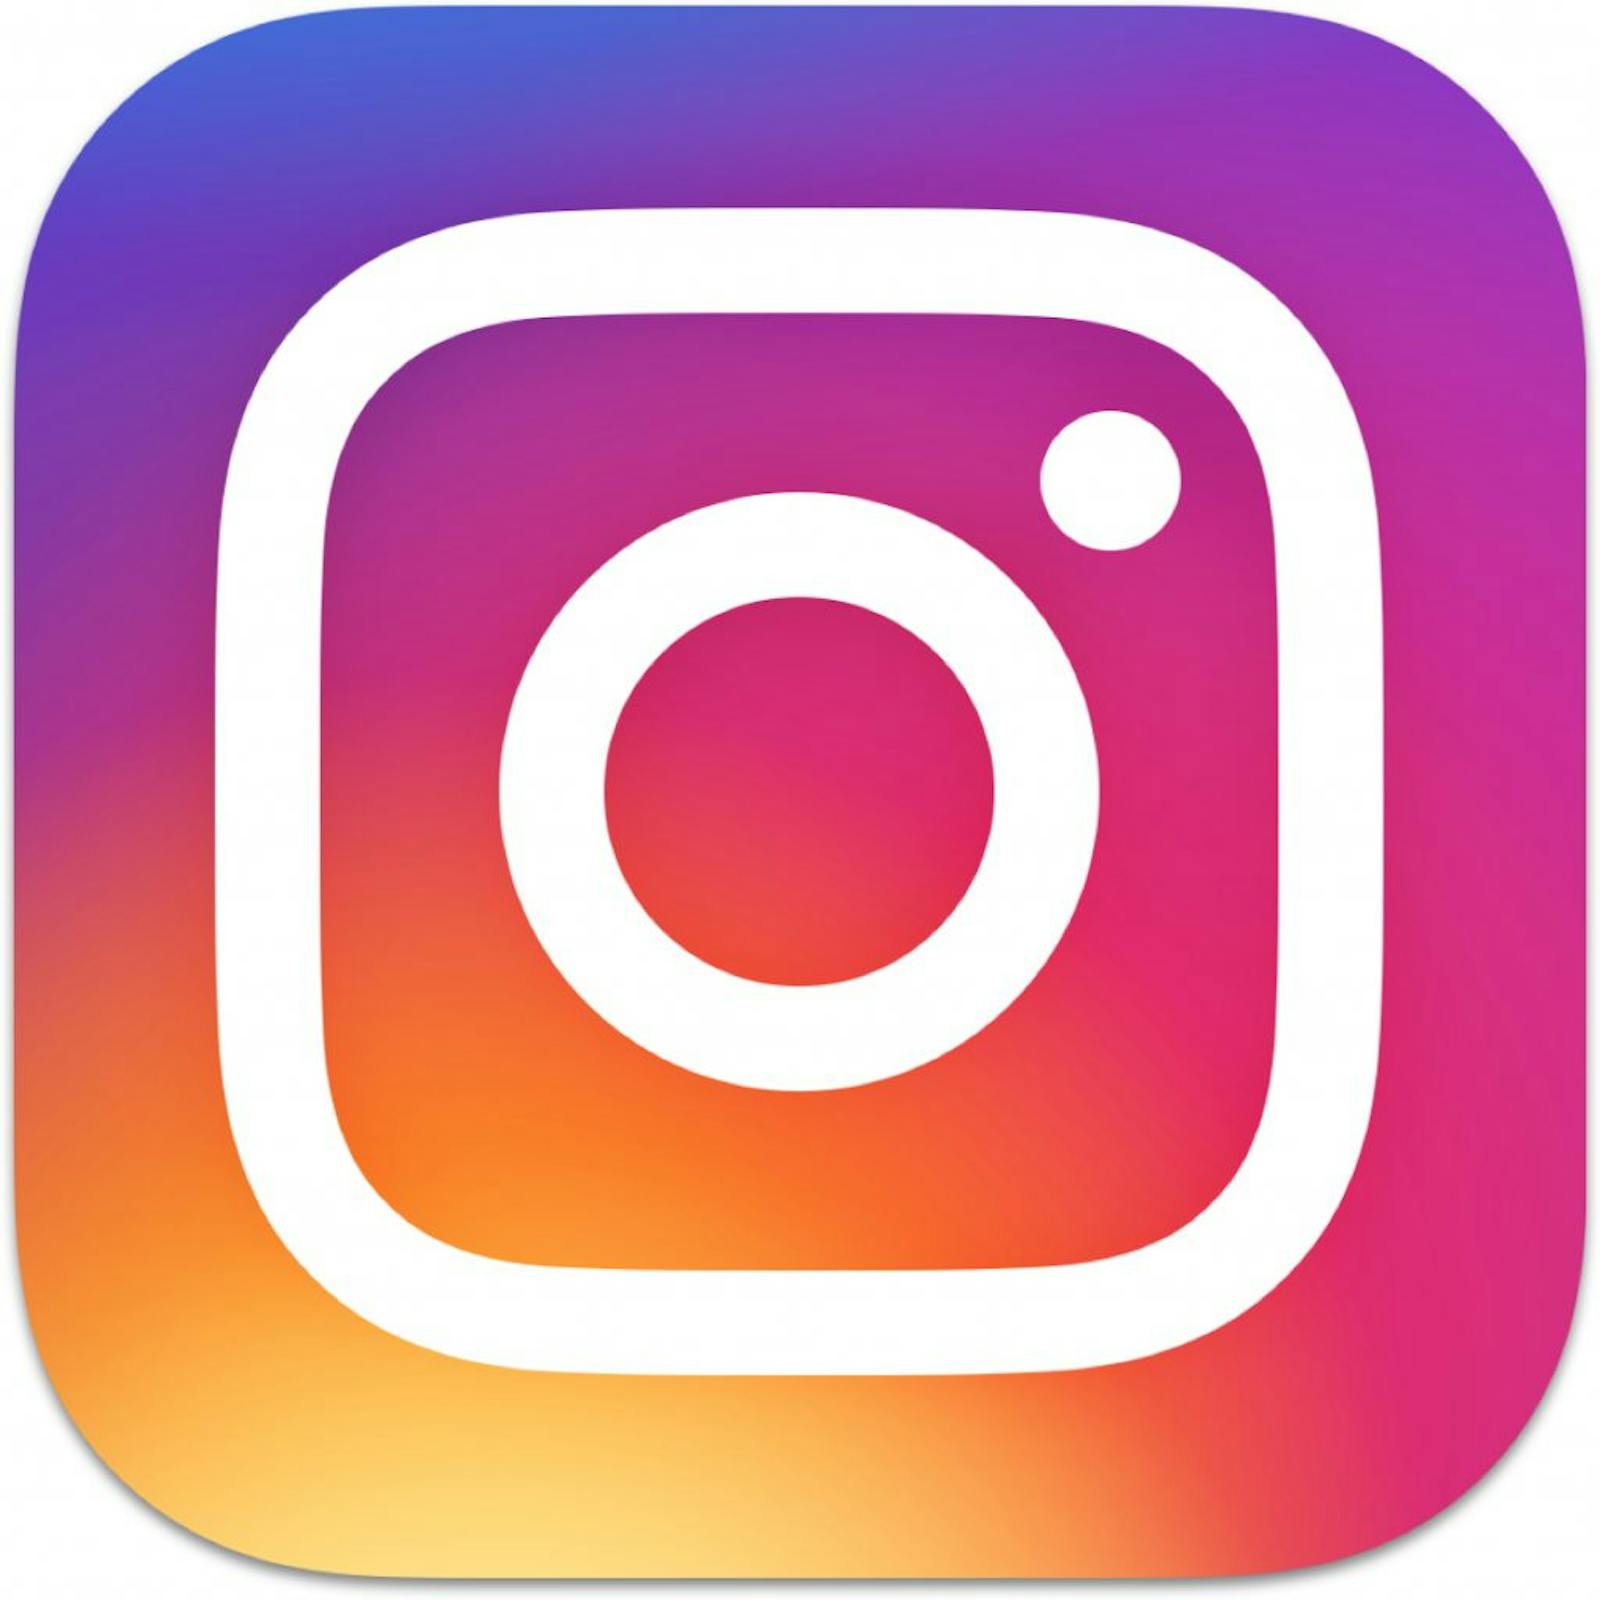 Follow @valencecommunity on Instagram →